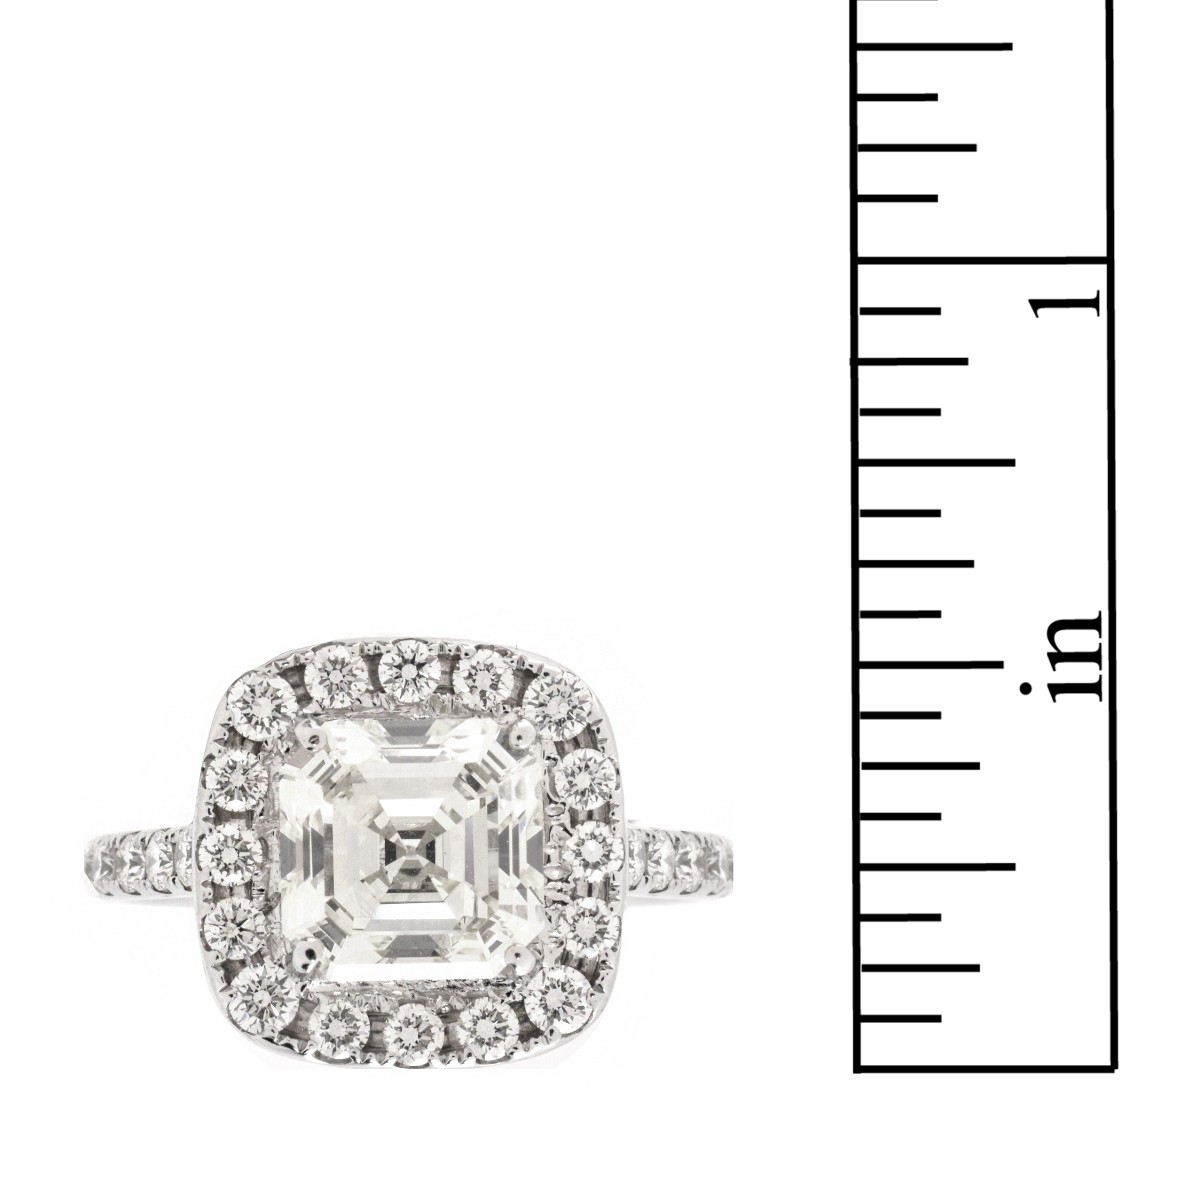 3.54 Carat Diamond and 18K Ring